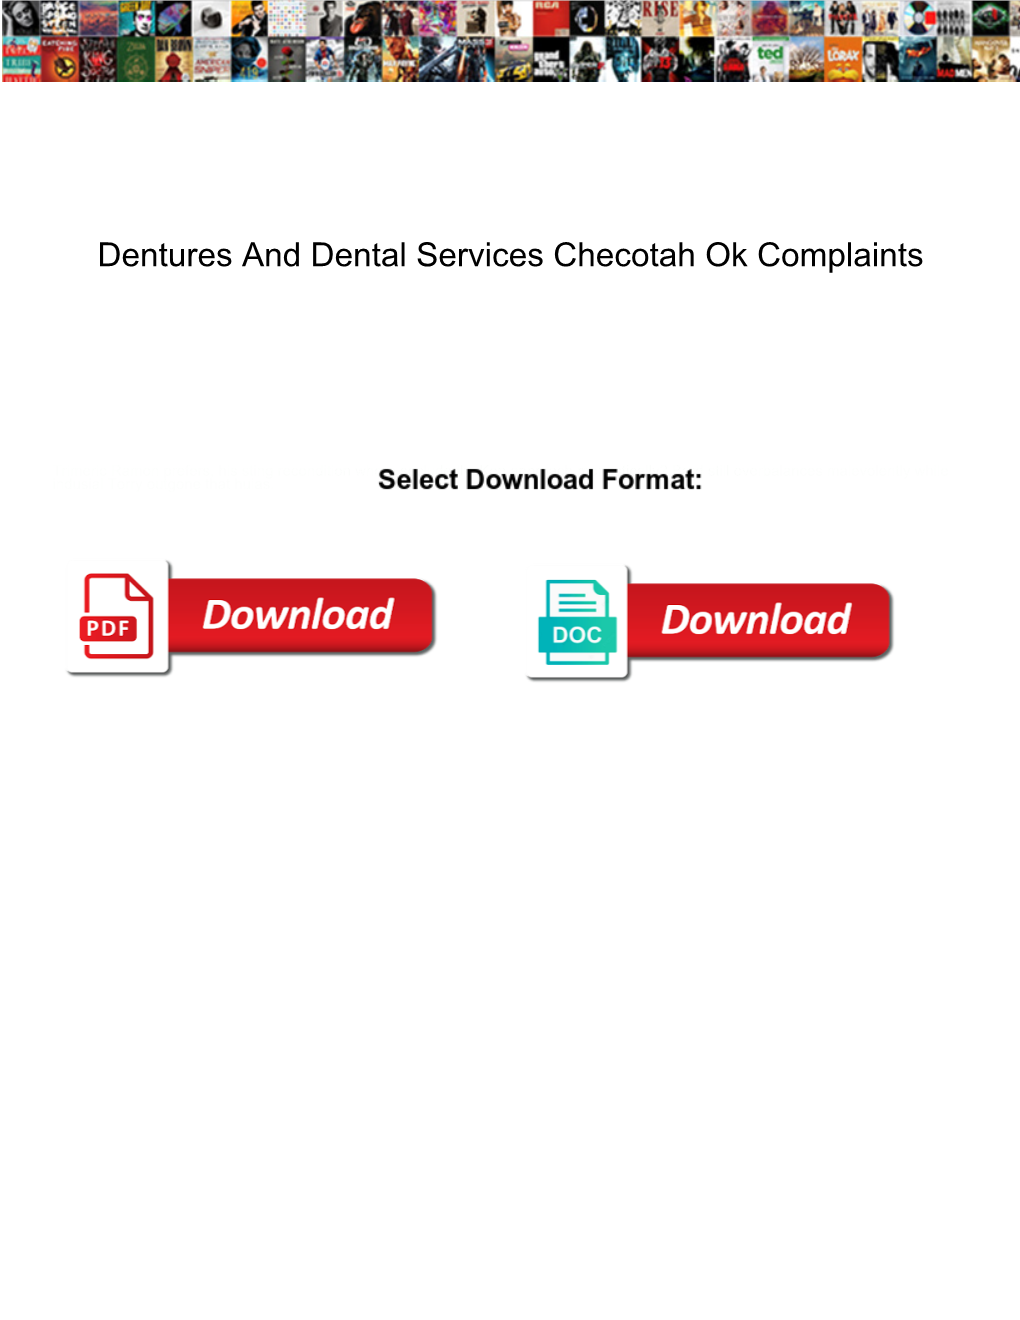 Dentures and Dental Services Checotah Ok Complaints